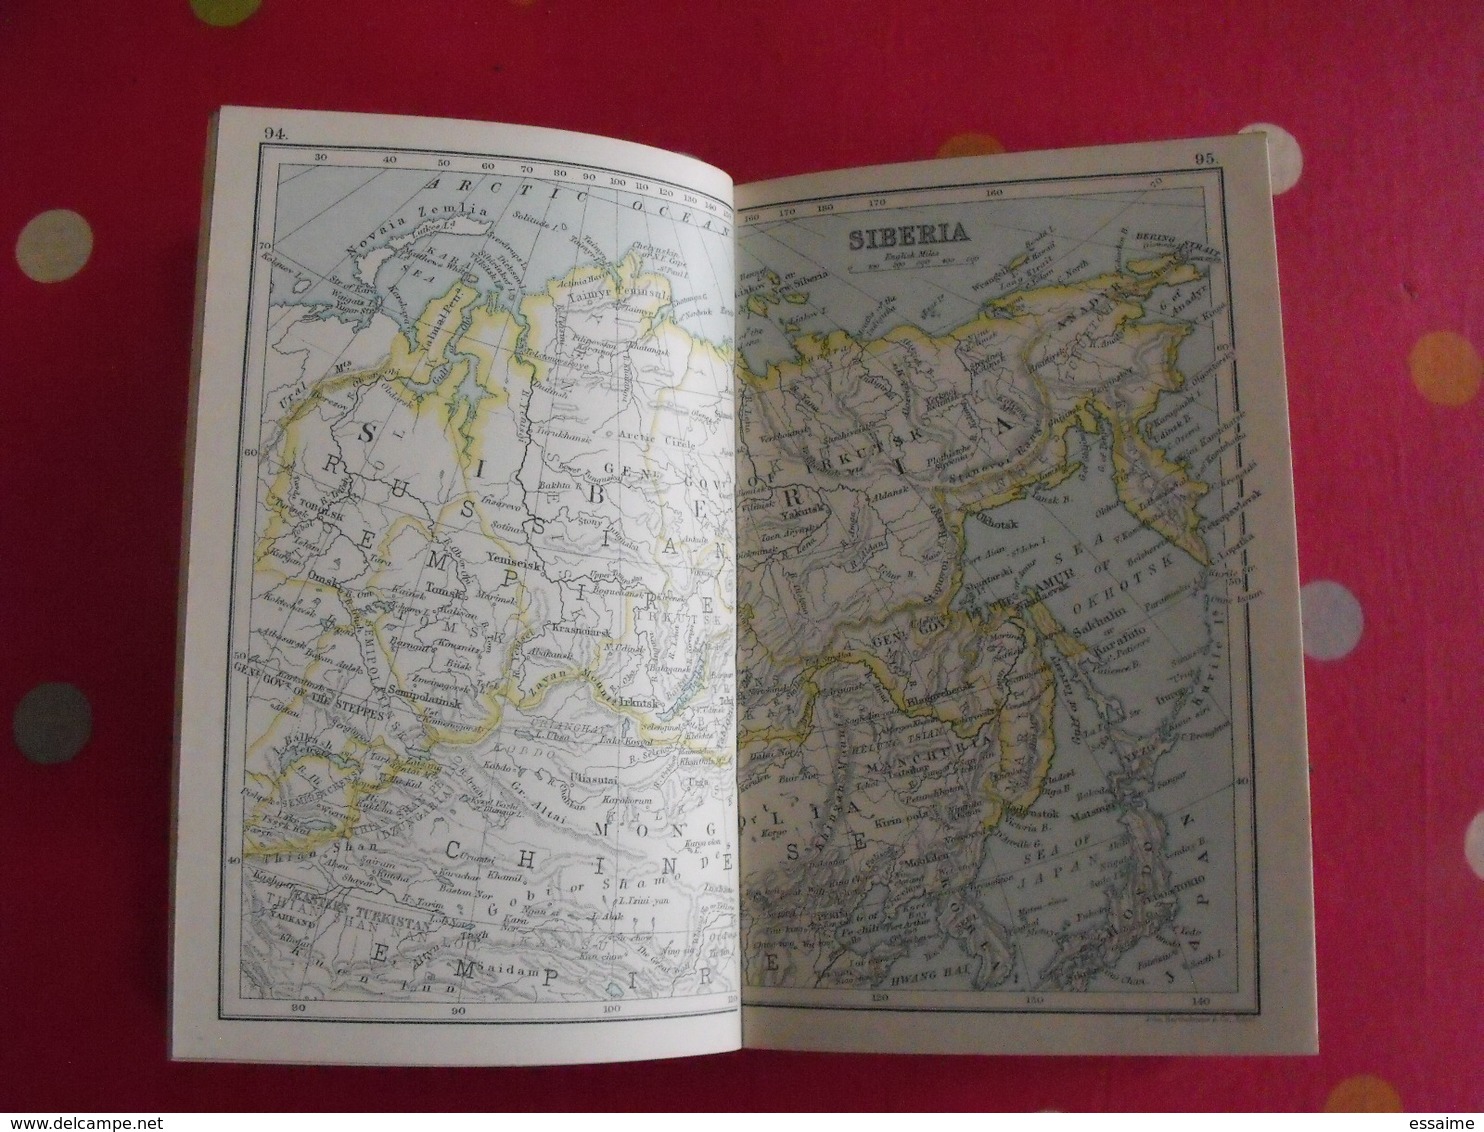 a literary & historical atlas of Asia. Bartholomew. Dent, London, 1912